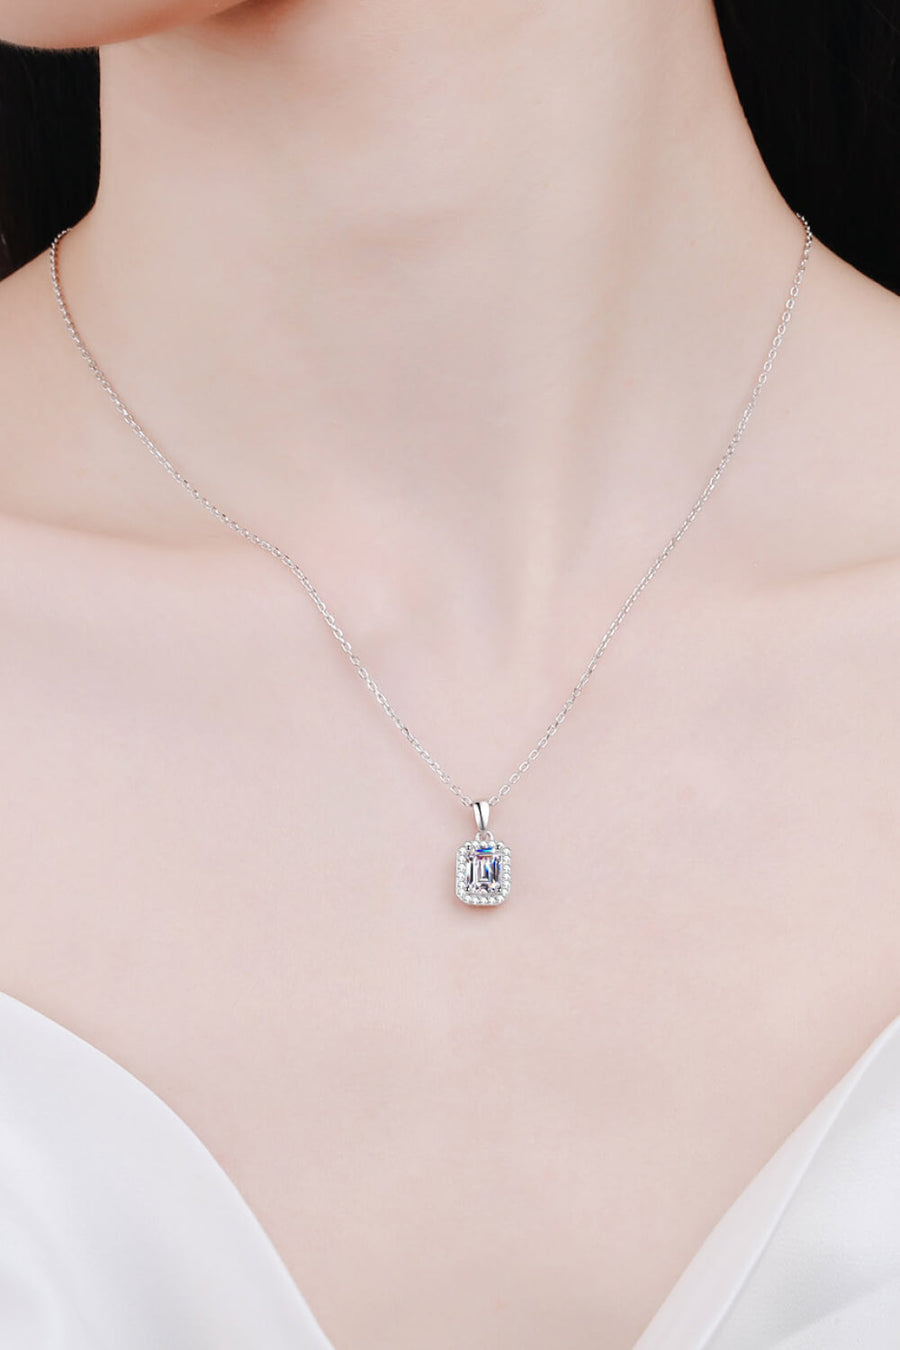 Best Diamond Necklace Jewelry Gifts for Women | 1 Carat Emerald Diamond Pendant Necklace | MASON New York